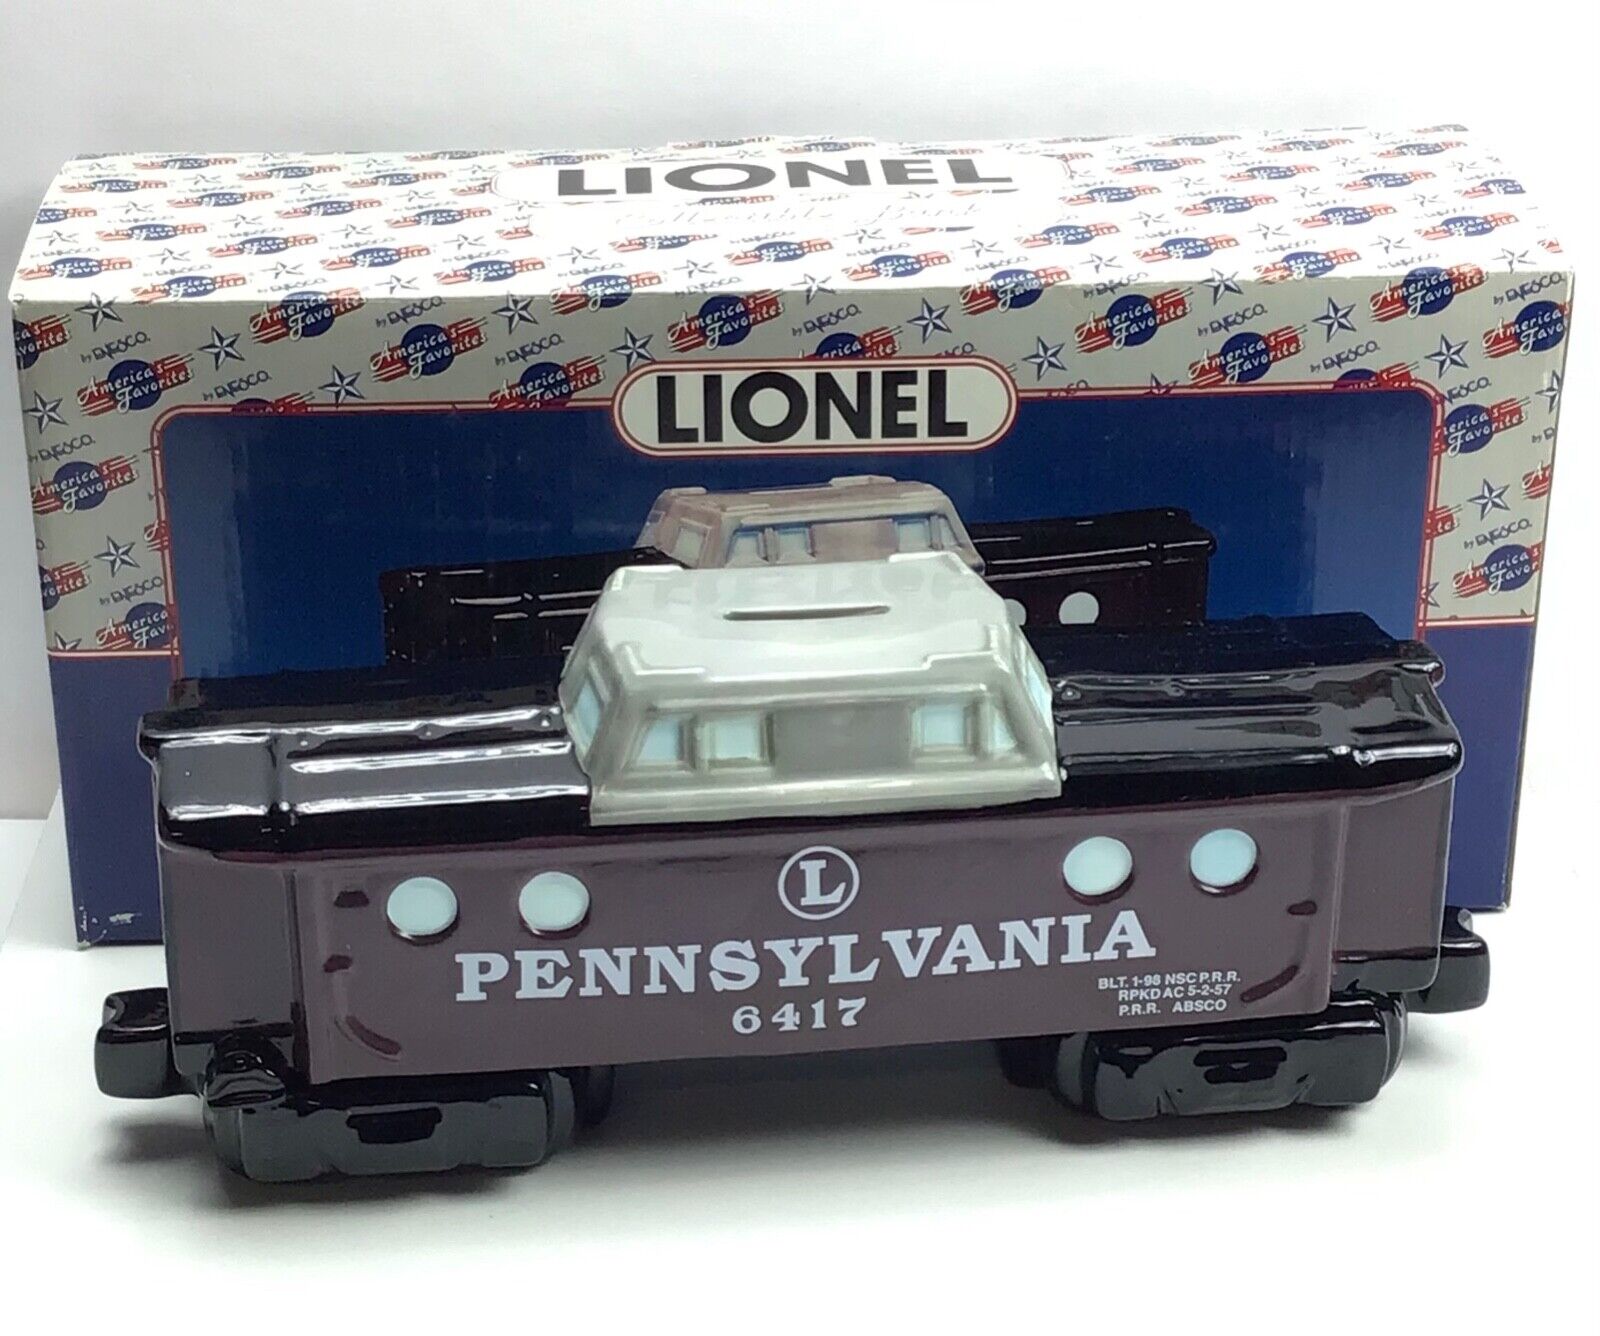 Lionel Trains by Enesco / Ceramic Bank / PRR Pennsylvania Railroad Caboose #6417